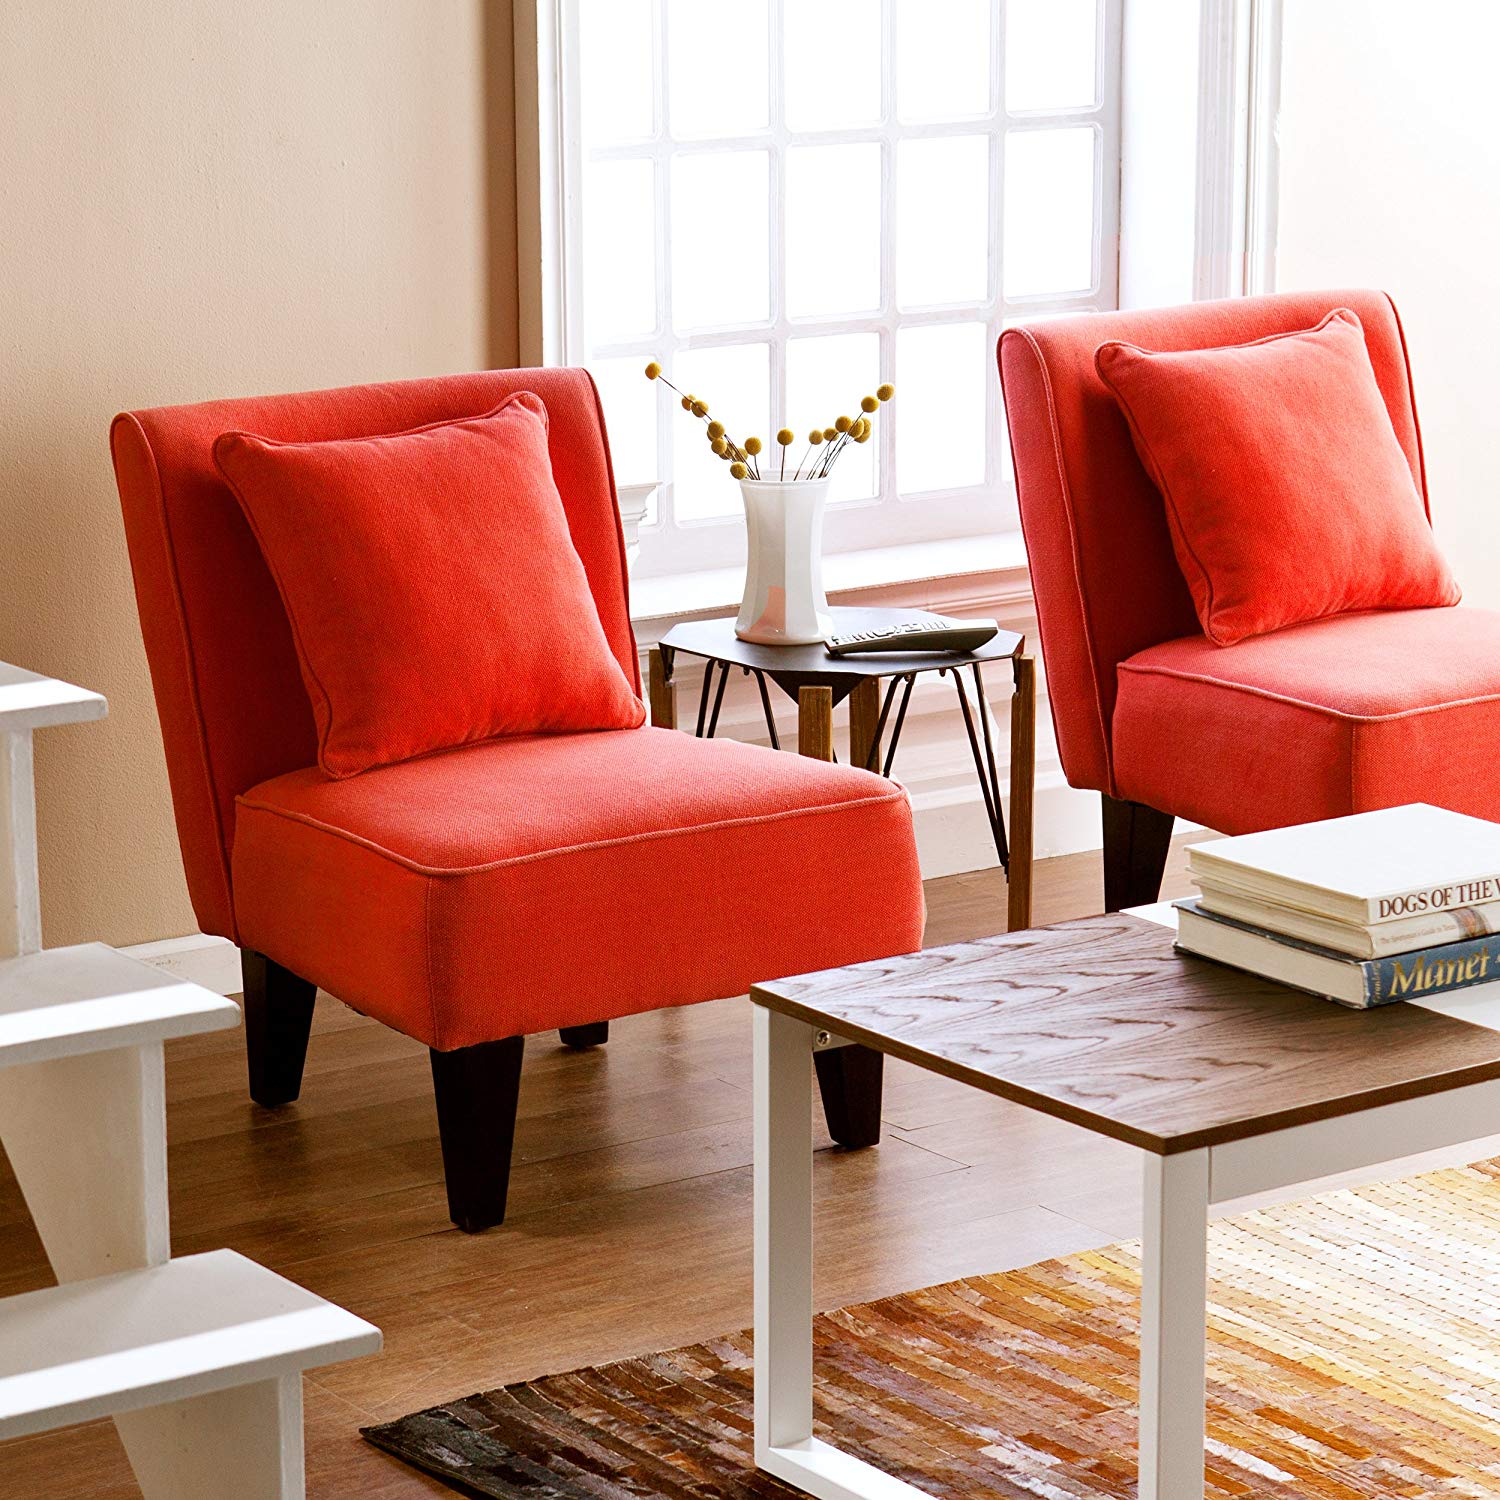 amazon.com: holly u0026 martin purban 2pc slipper chairs - red-orange: kitchen ZZEMPIP